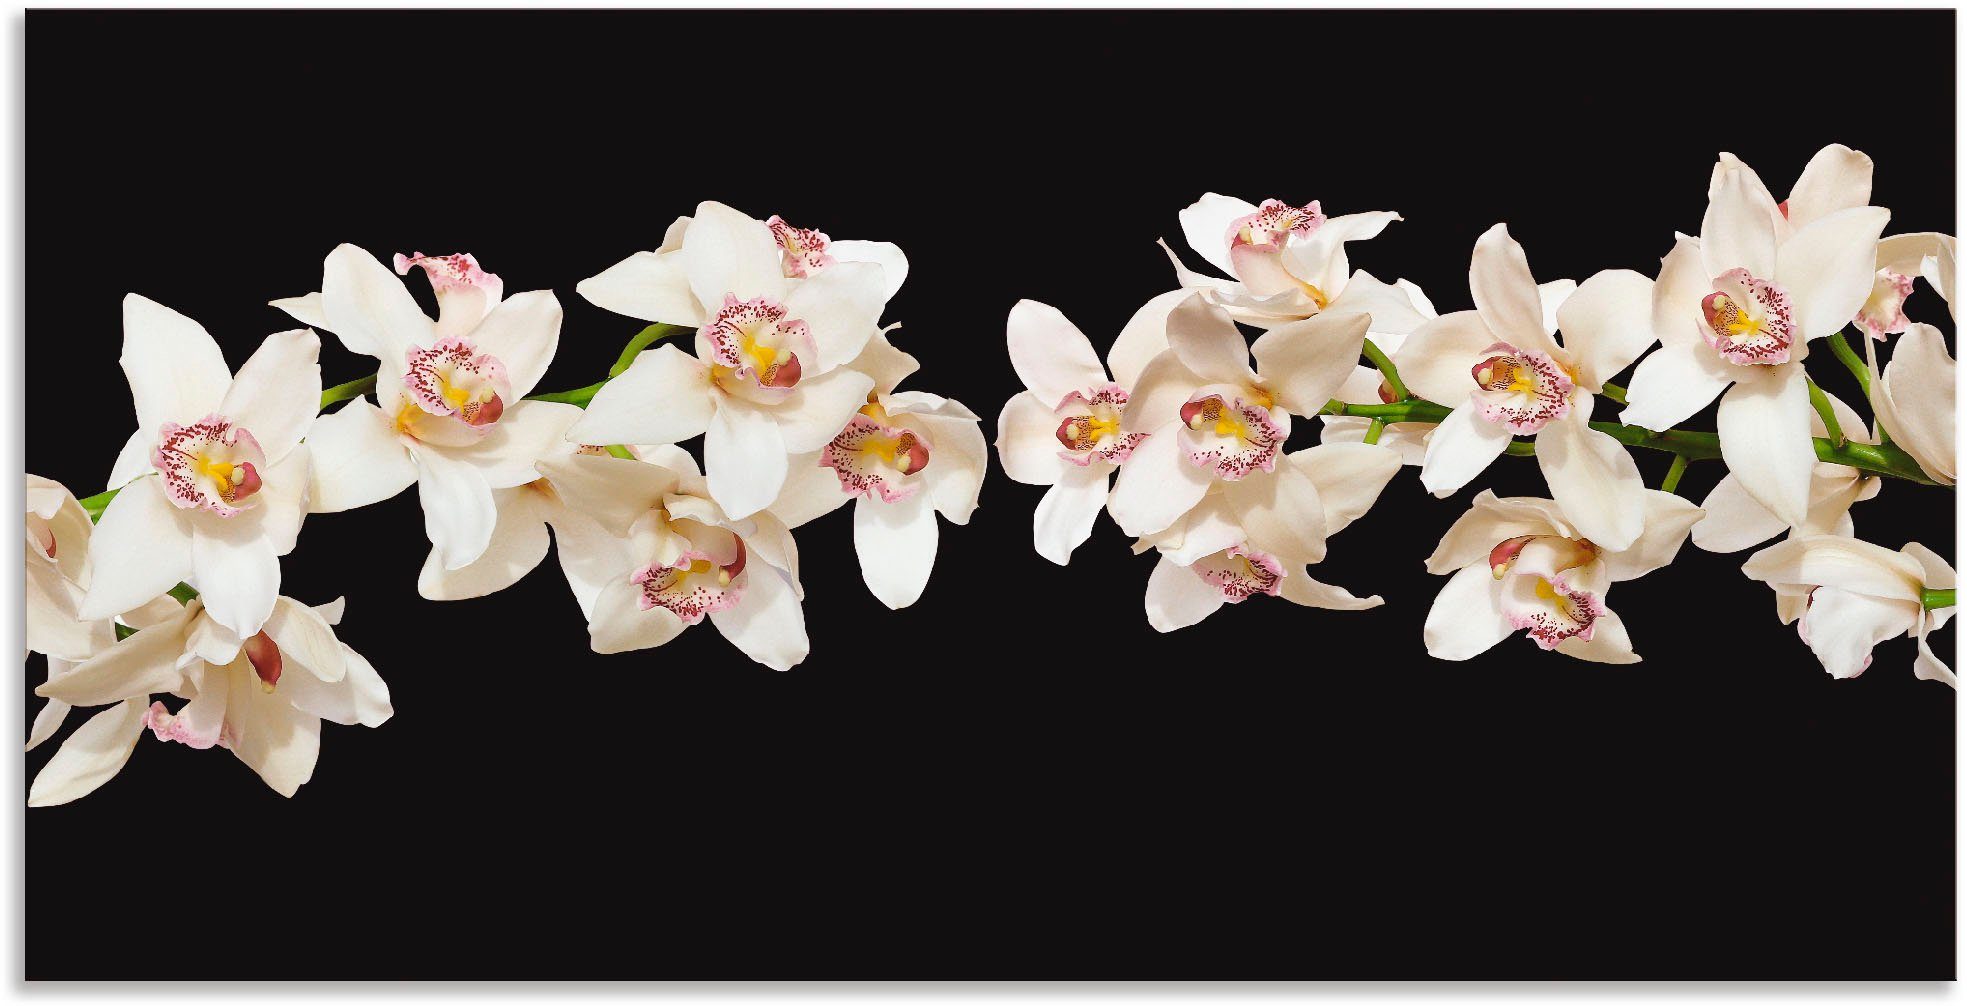 Artland Artprint Witte orchideeën in vele afmetingen & productsoorten - artprint van aluminium / artprint voor buiten, artprint op linnen, poster, muursticker / wandfolie ook gesch